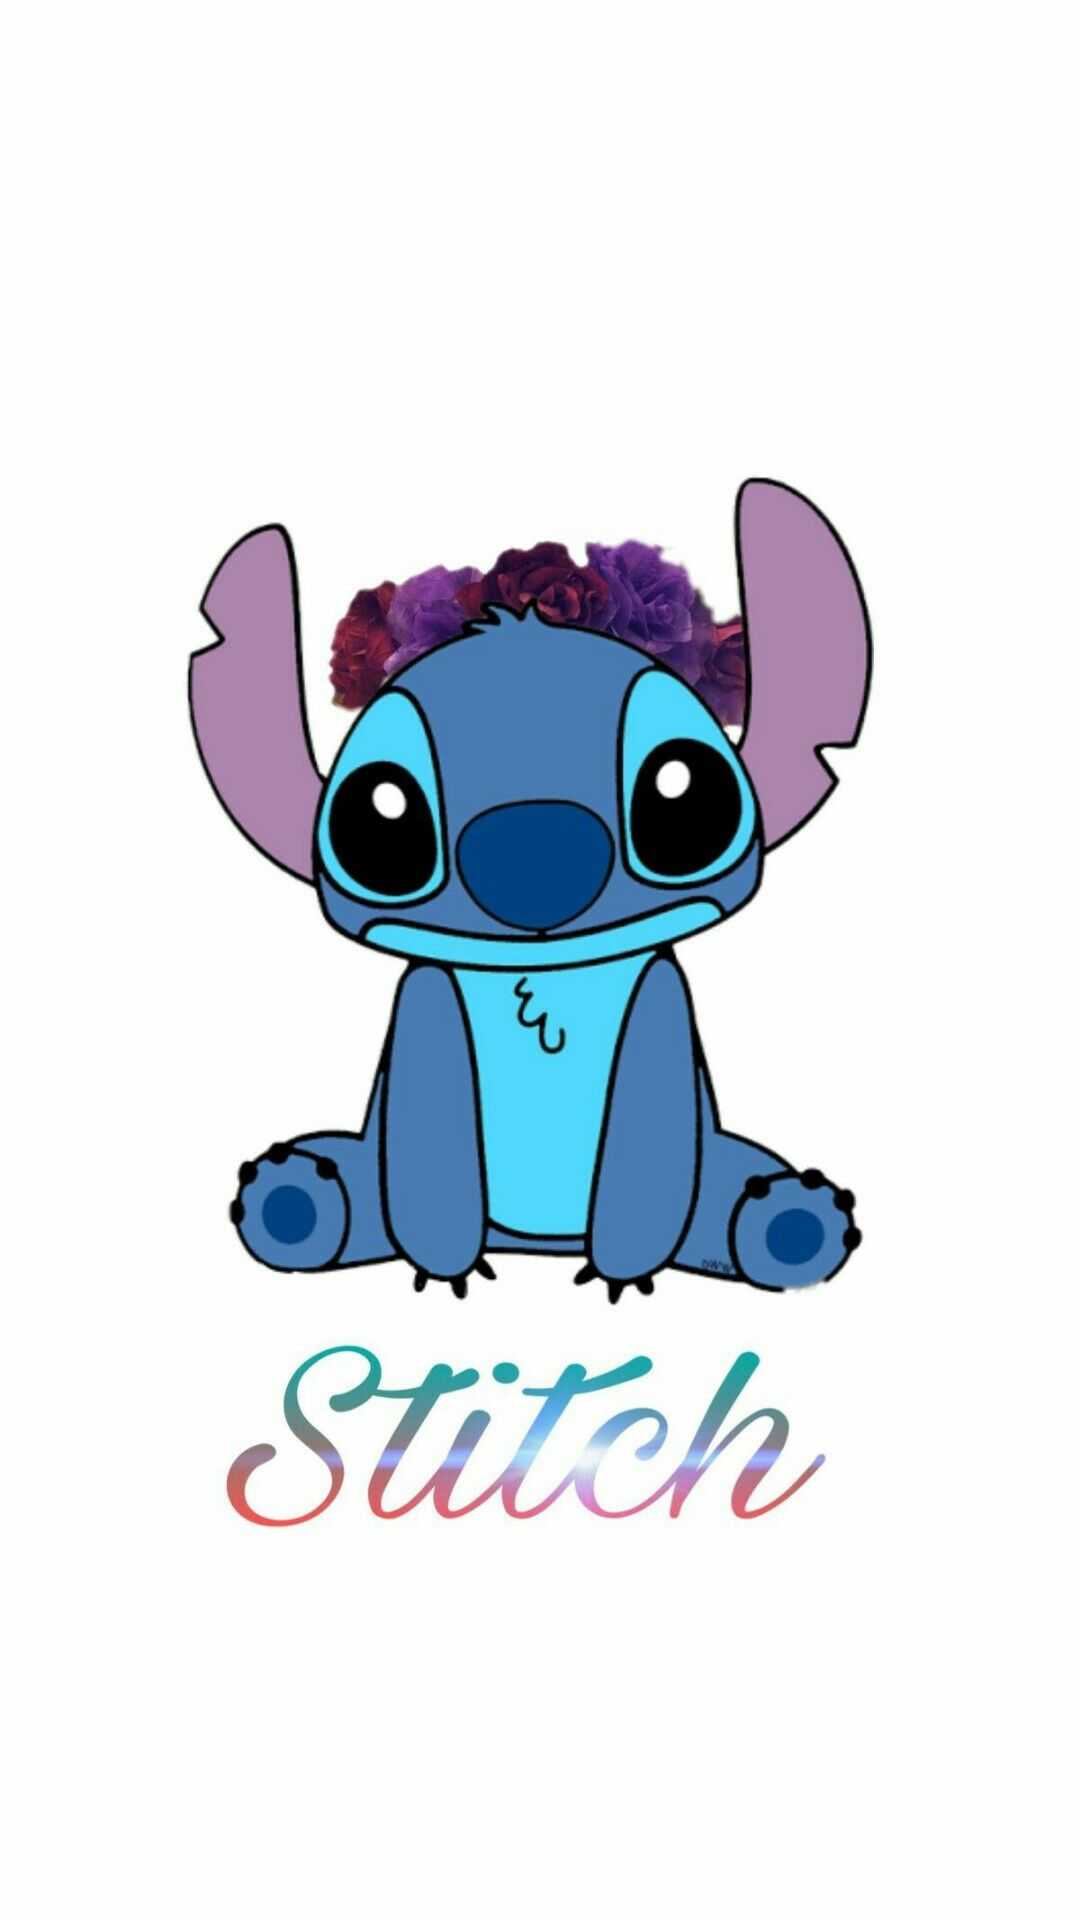 Pink Disney Stitch Ohana Leaves – 5 Little Monkeys Quilting